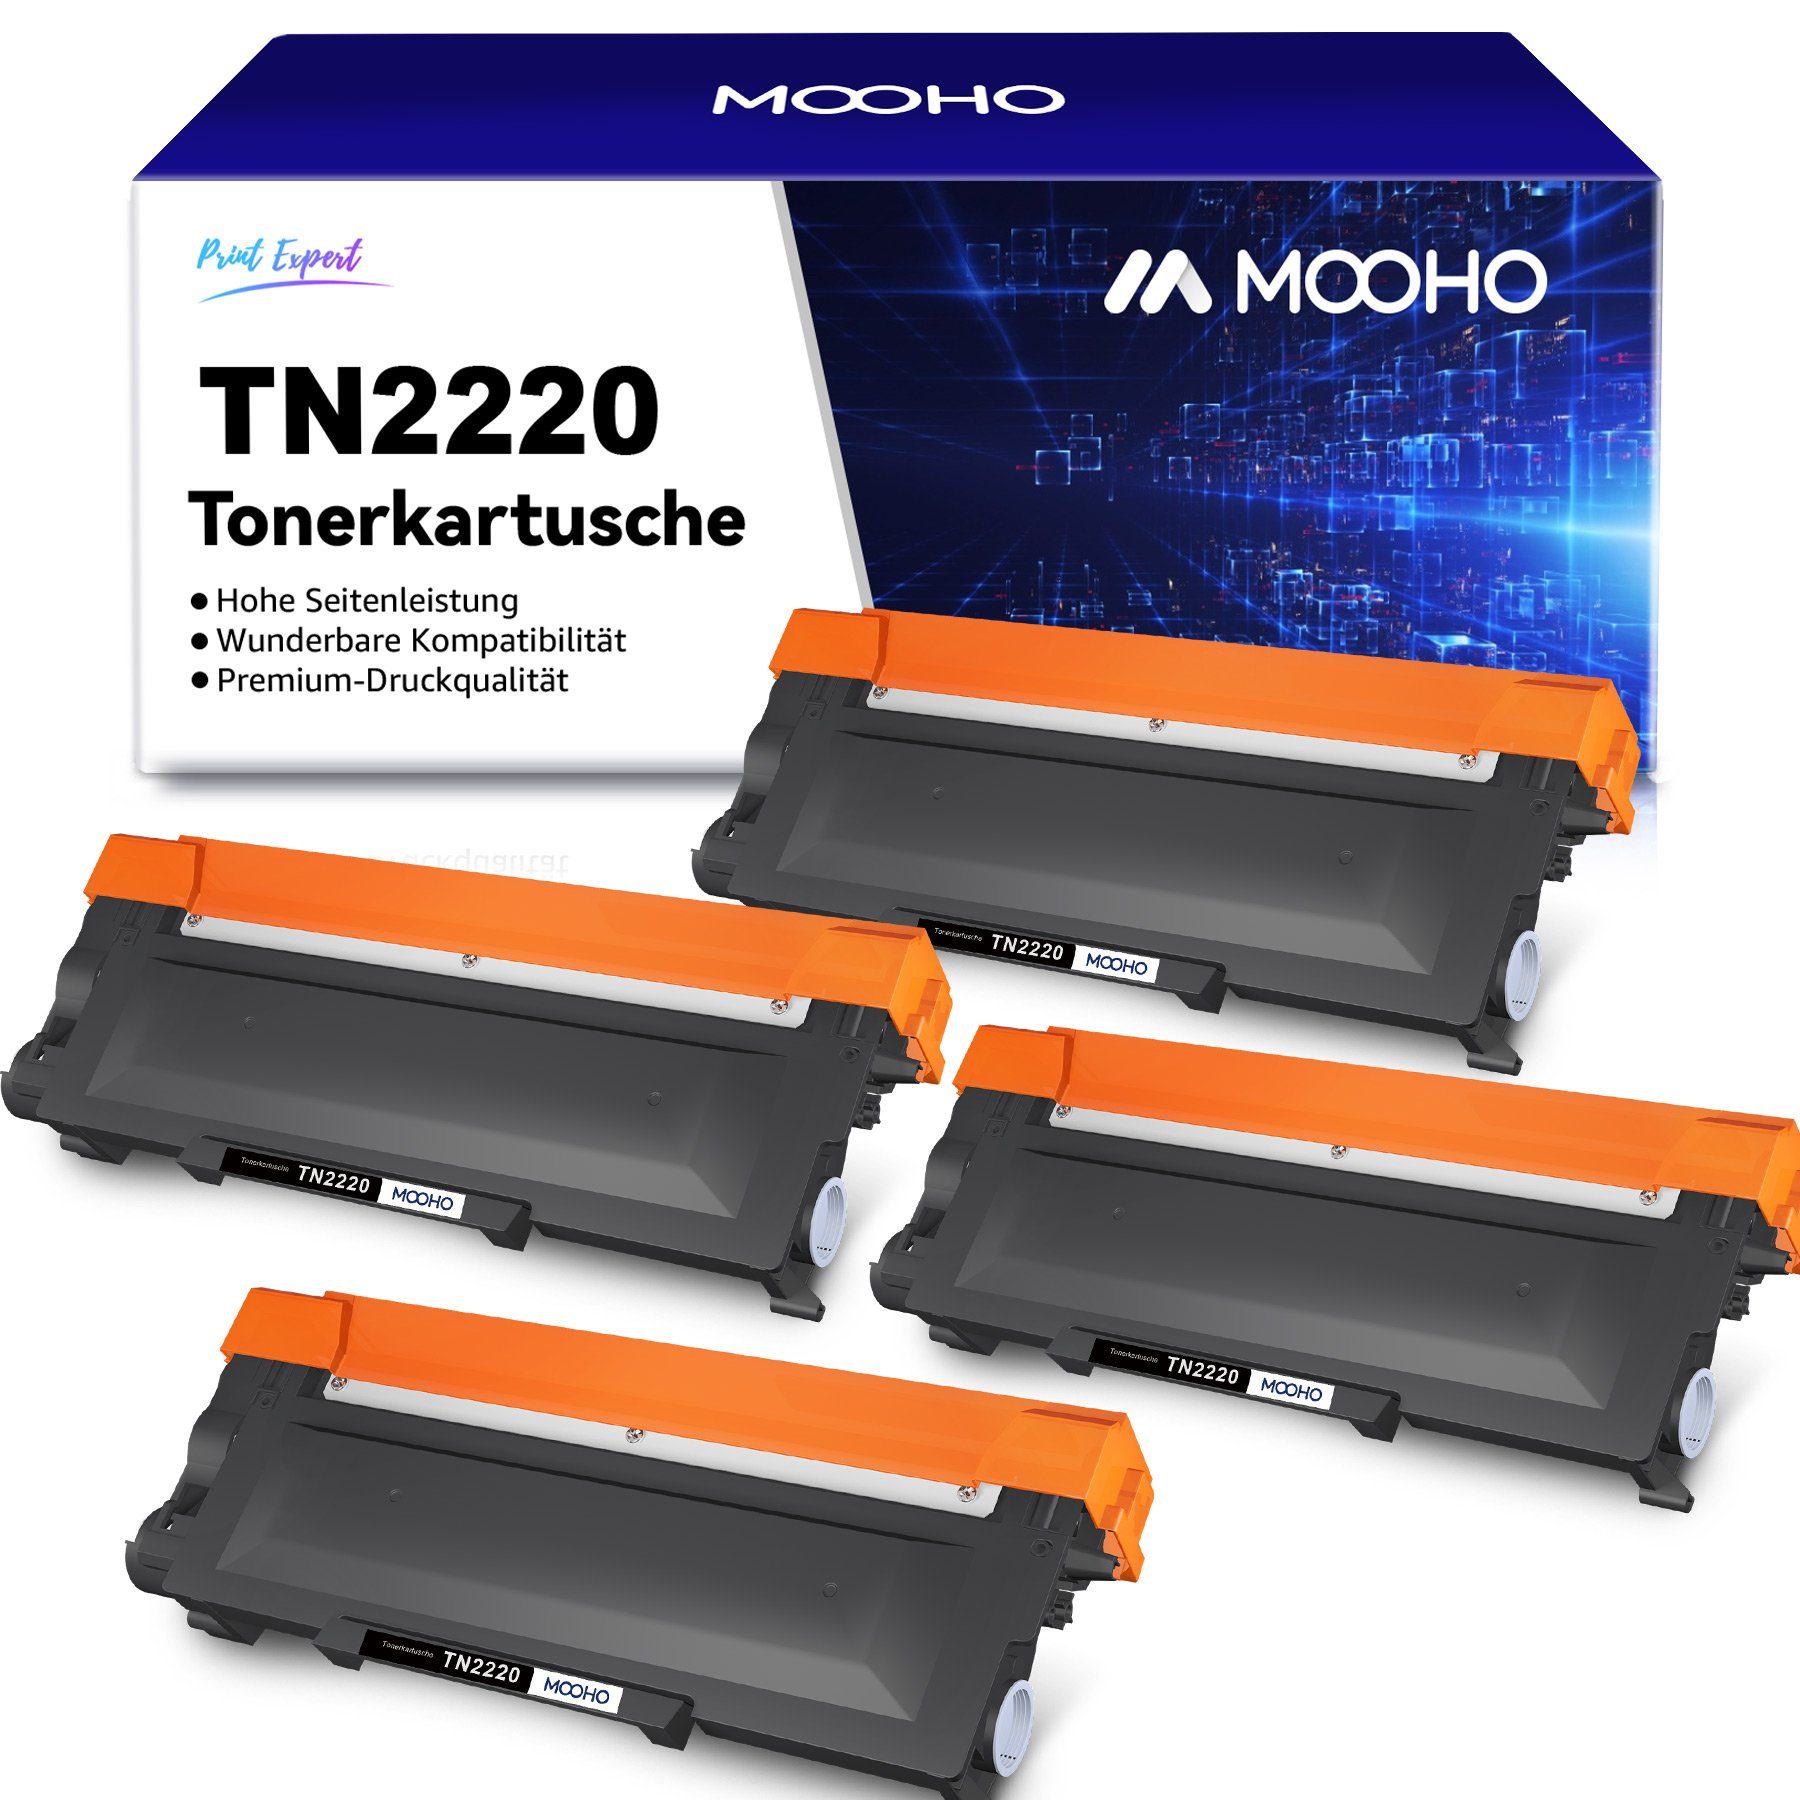 MOOHO Tonerkartusche 4x Schwarz Ersatz TN 2010 TN2220 TN-2010 TN2010, für Brother TN 2220 HL-2130 MFC-7360N DCP-7055 MFC-7460DN HL-2250DN | Tonerpatronen